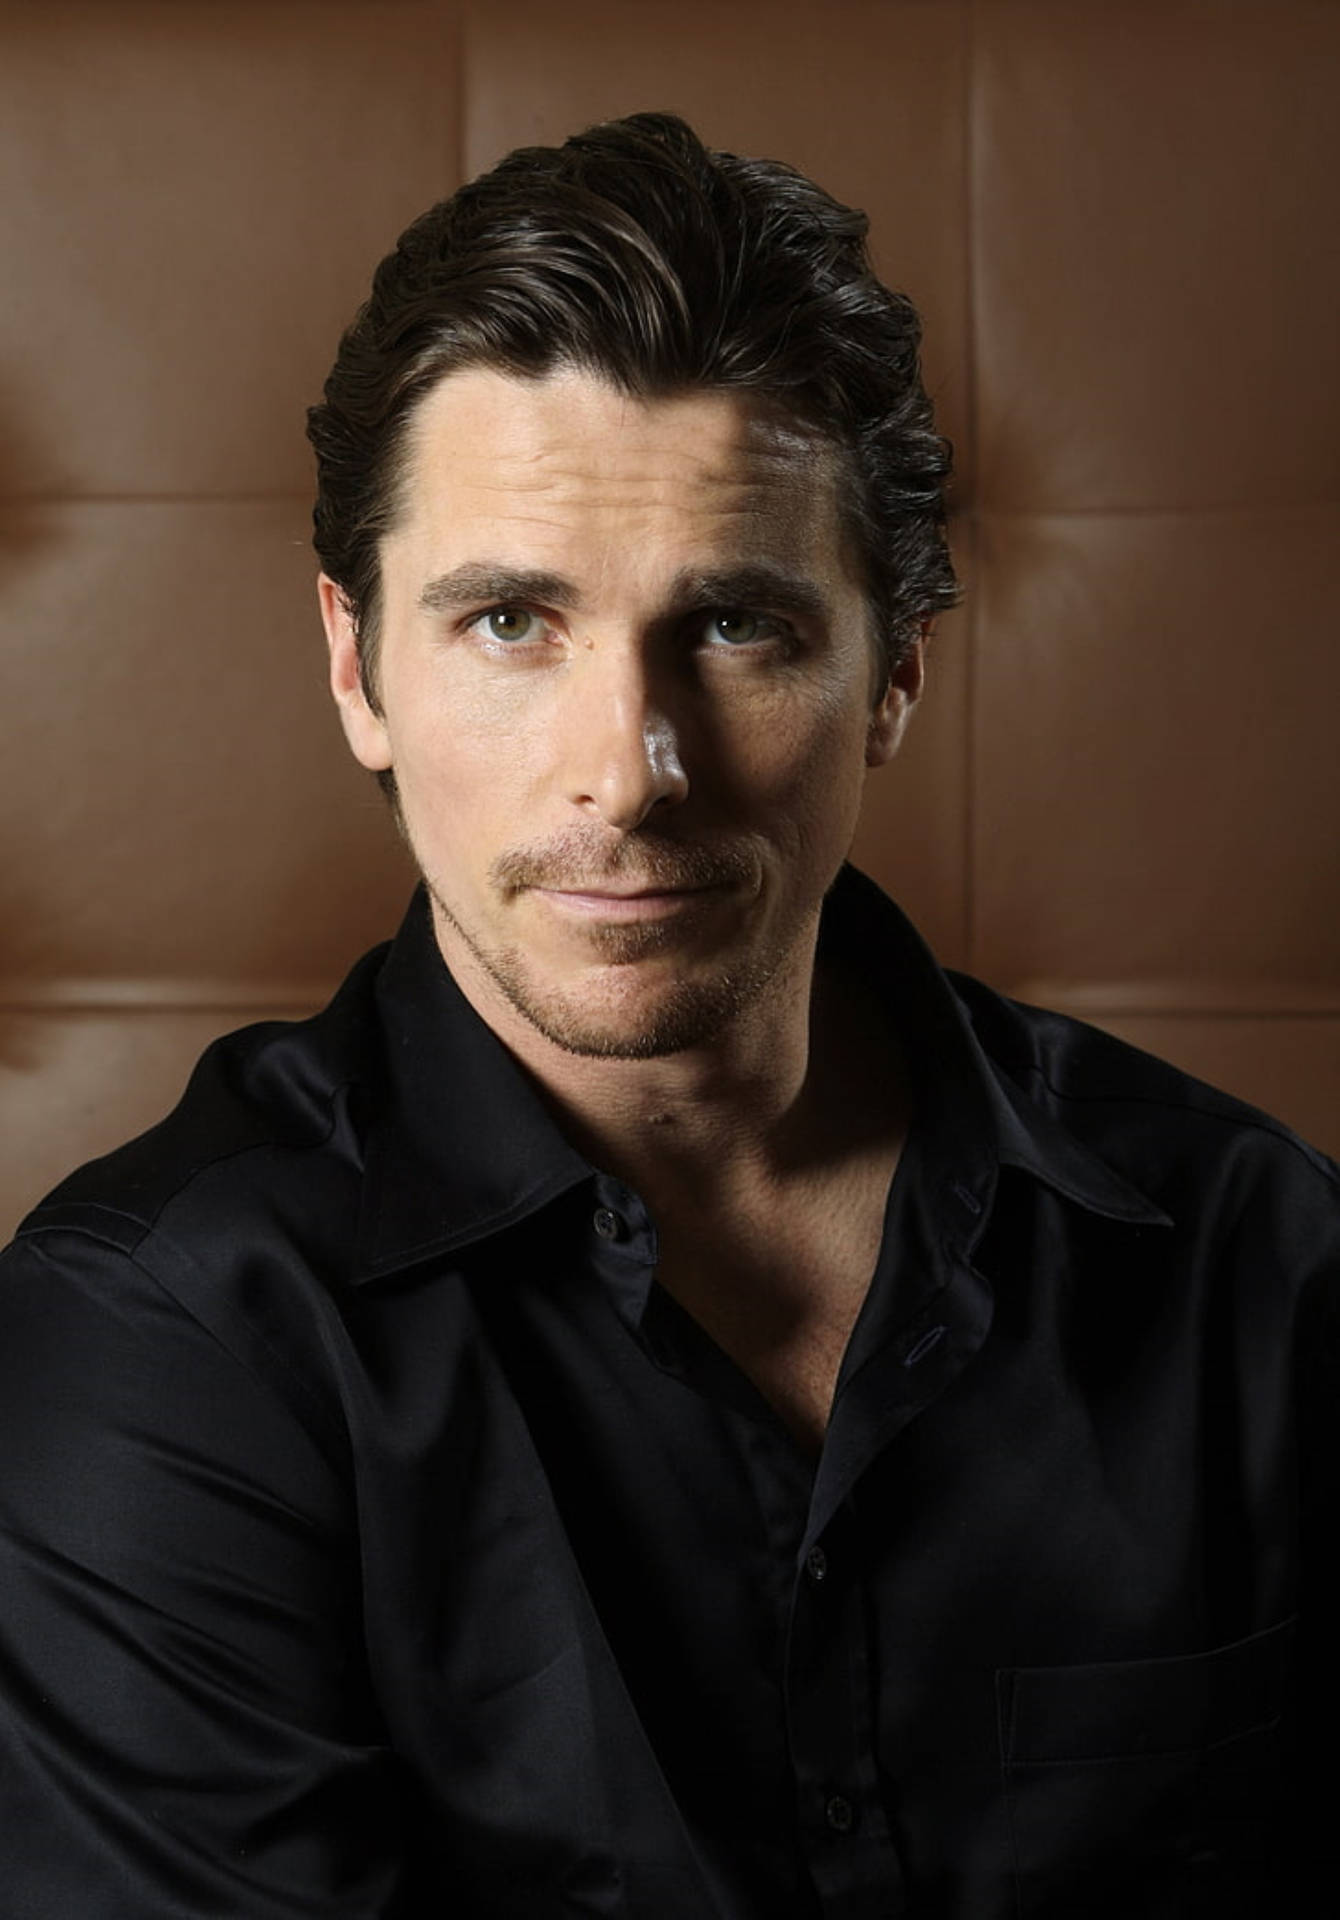 Hot British Actor Christian Bale